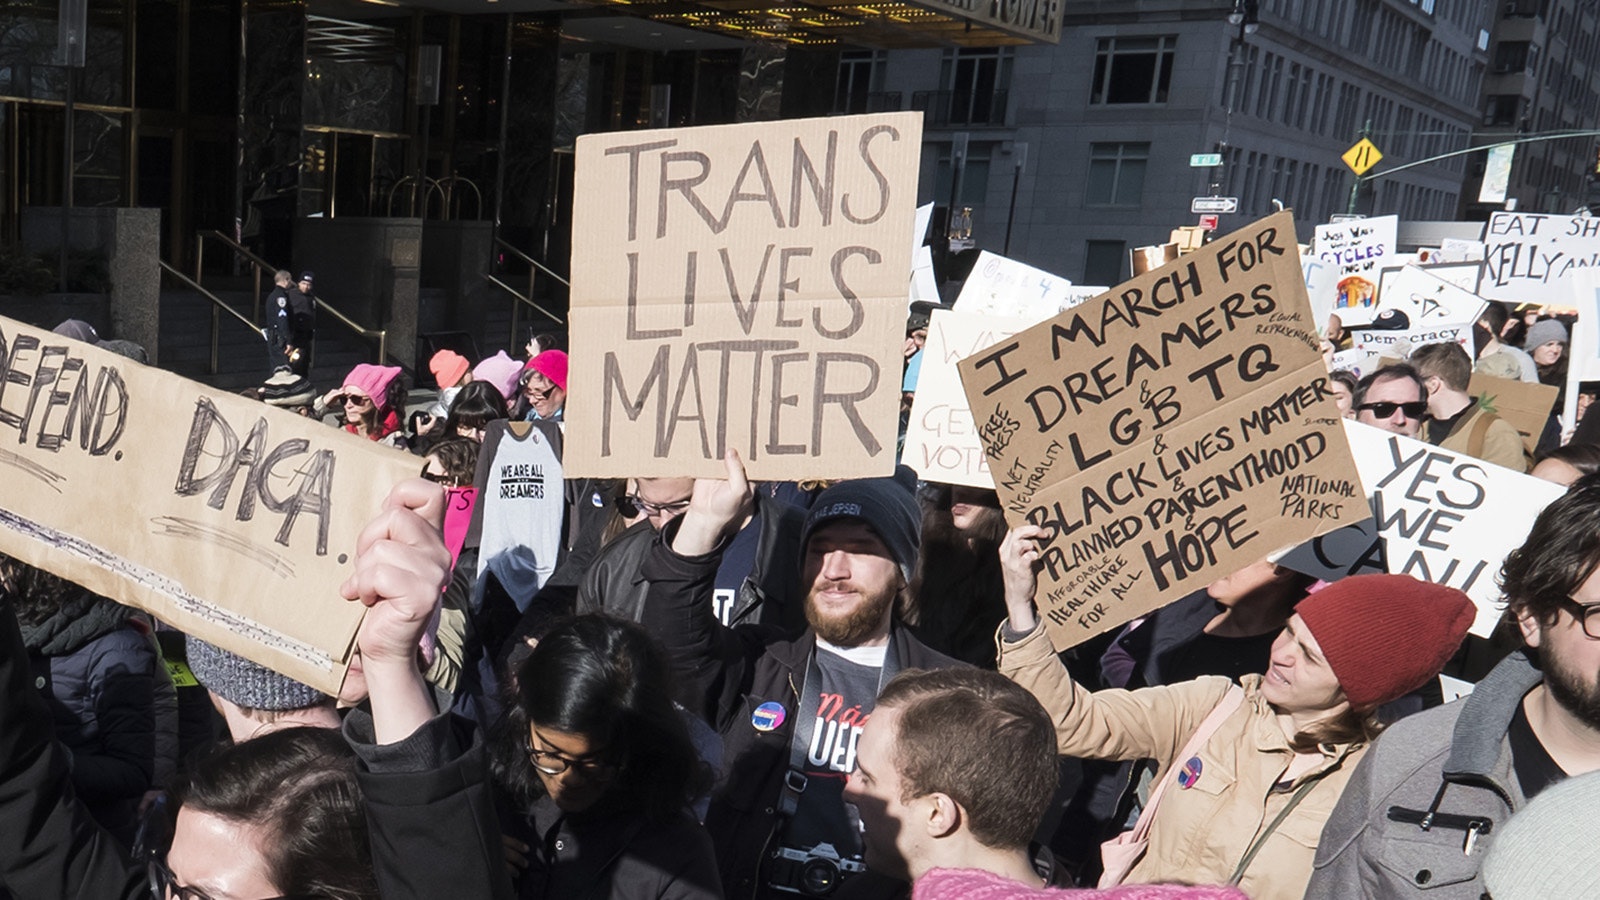 Trans lives matter rally sign 4 19 23